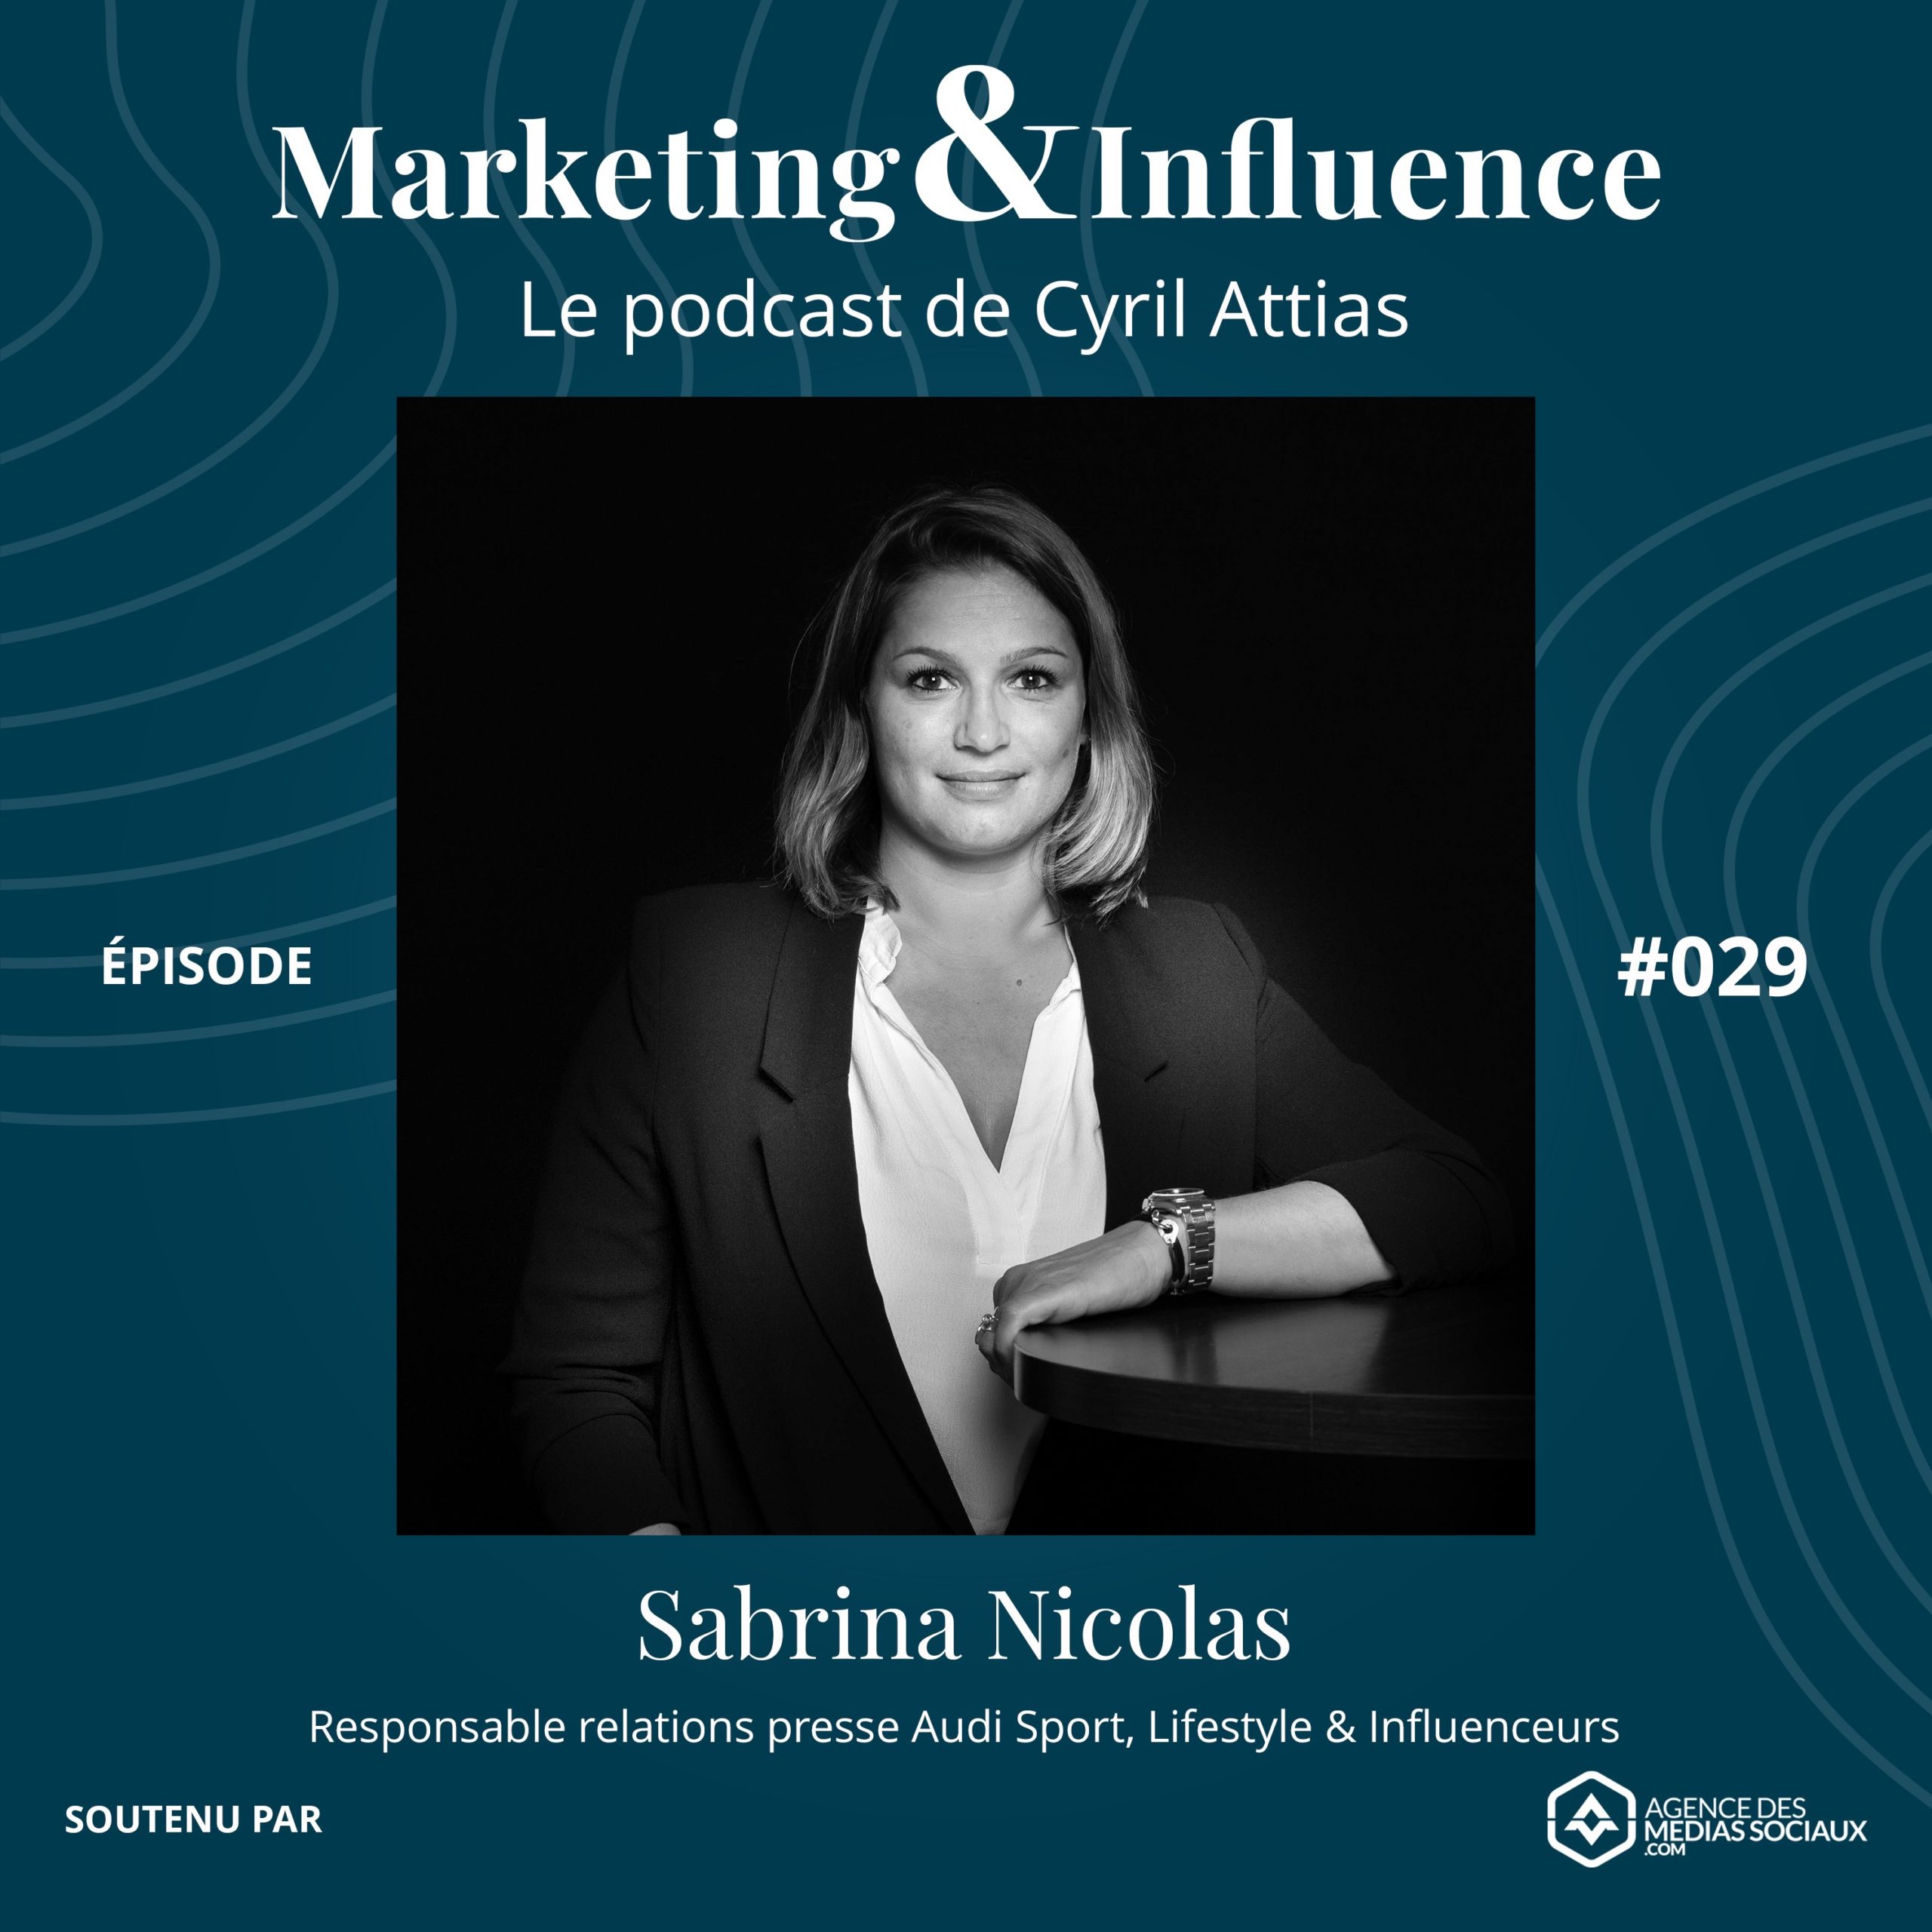 Sabrina-Nicolas-Audi-France-Podcast-Cyril-Attias-Marketing-Influence